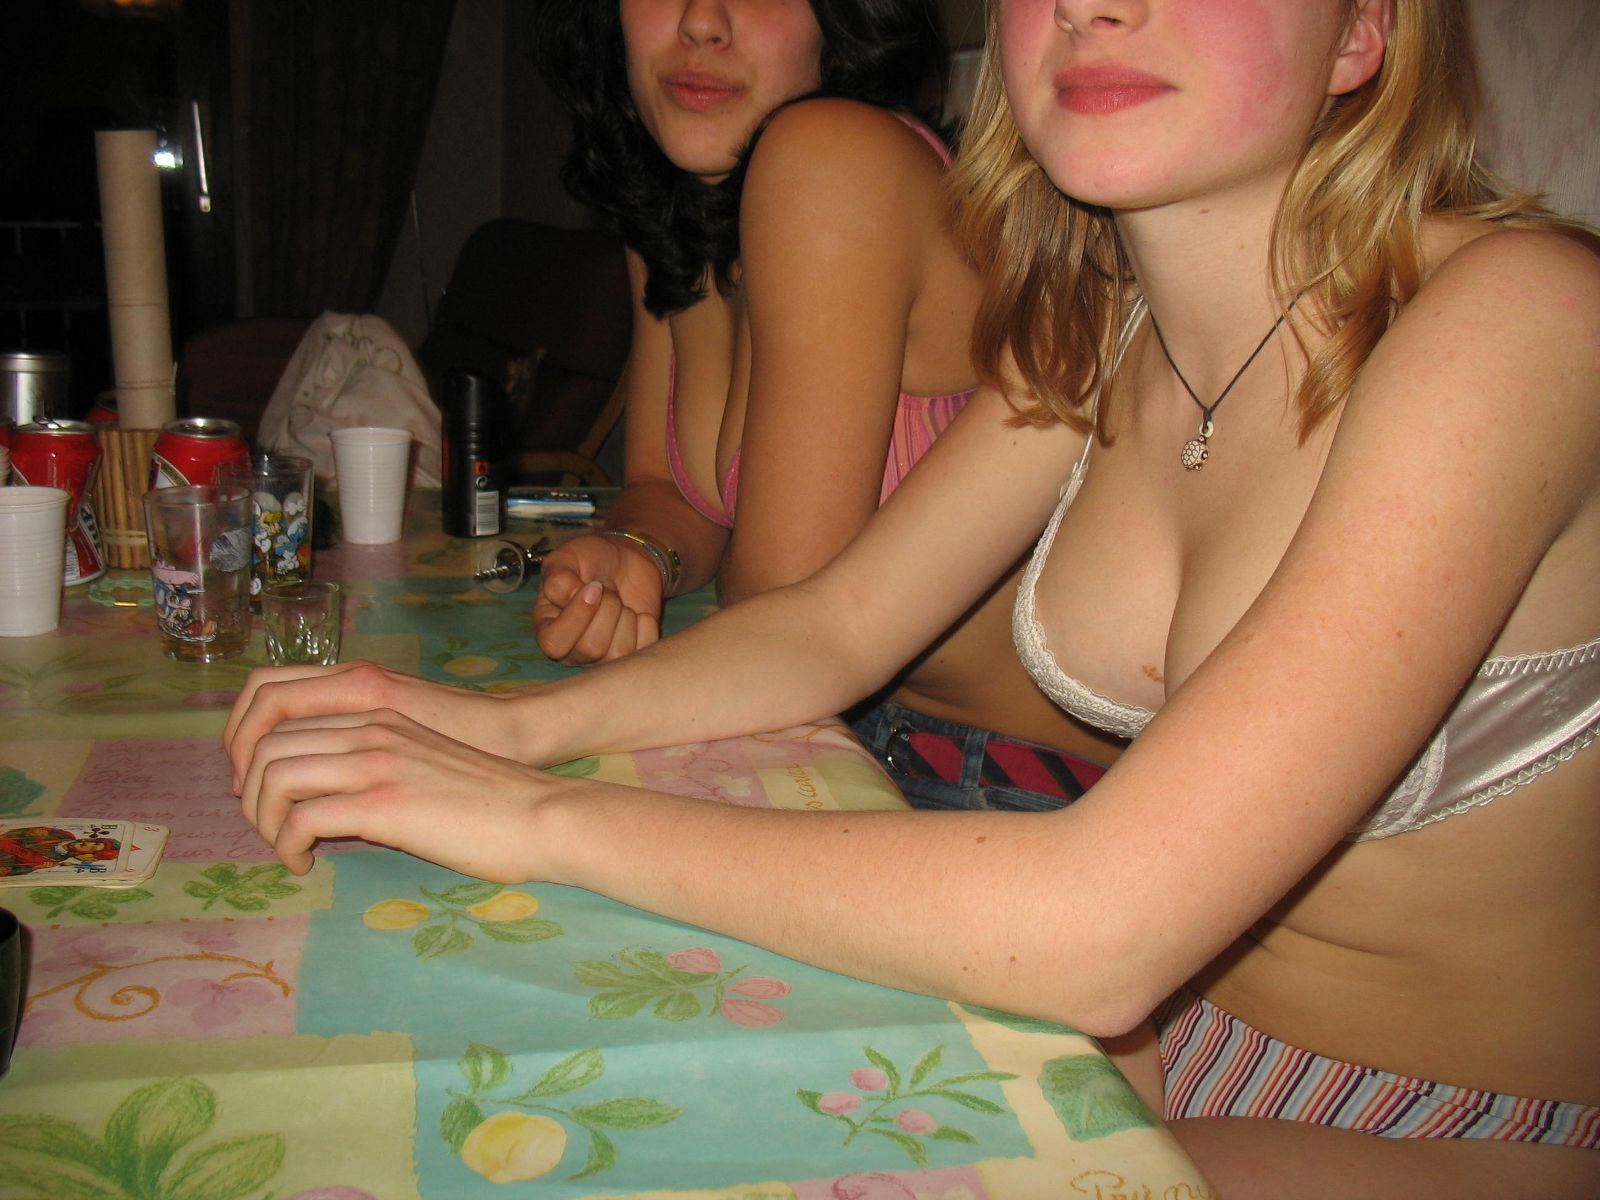 Manhattan Harmonious Generator Girls of poker nude - Hot Nude Photos. Comments: 1